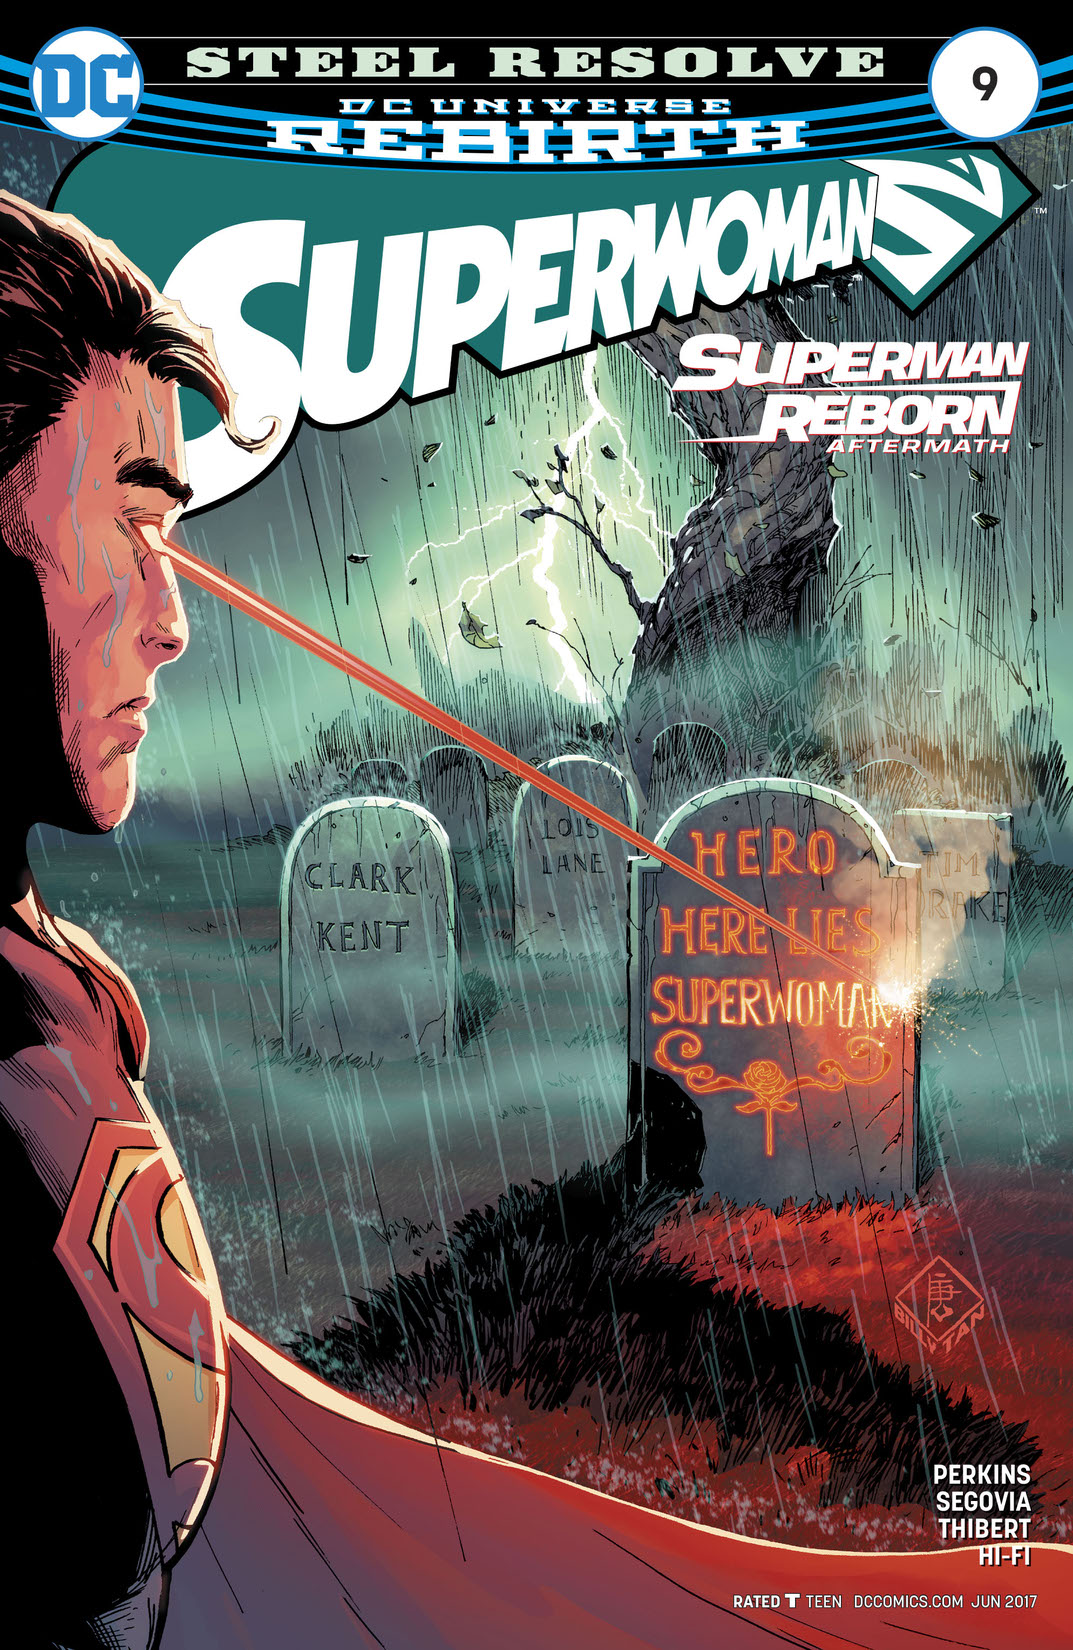 Superwoman #9 preview images